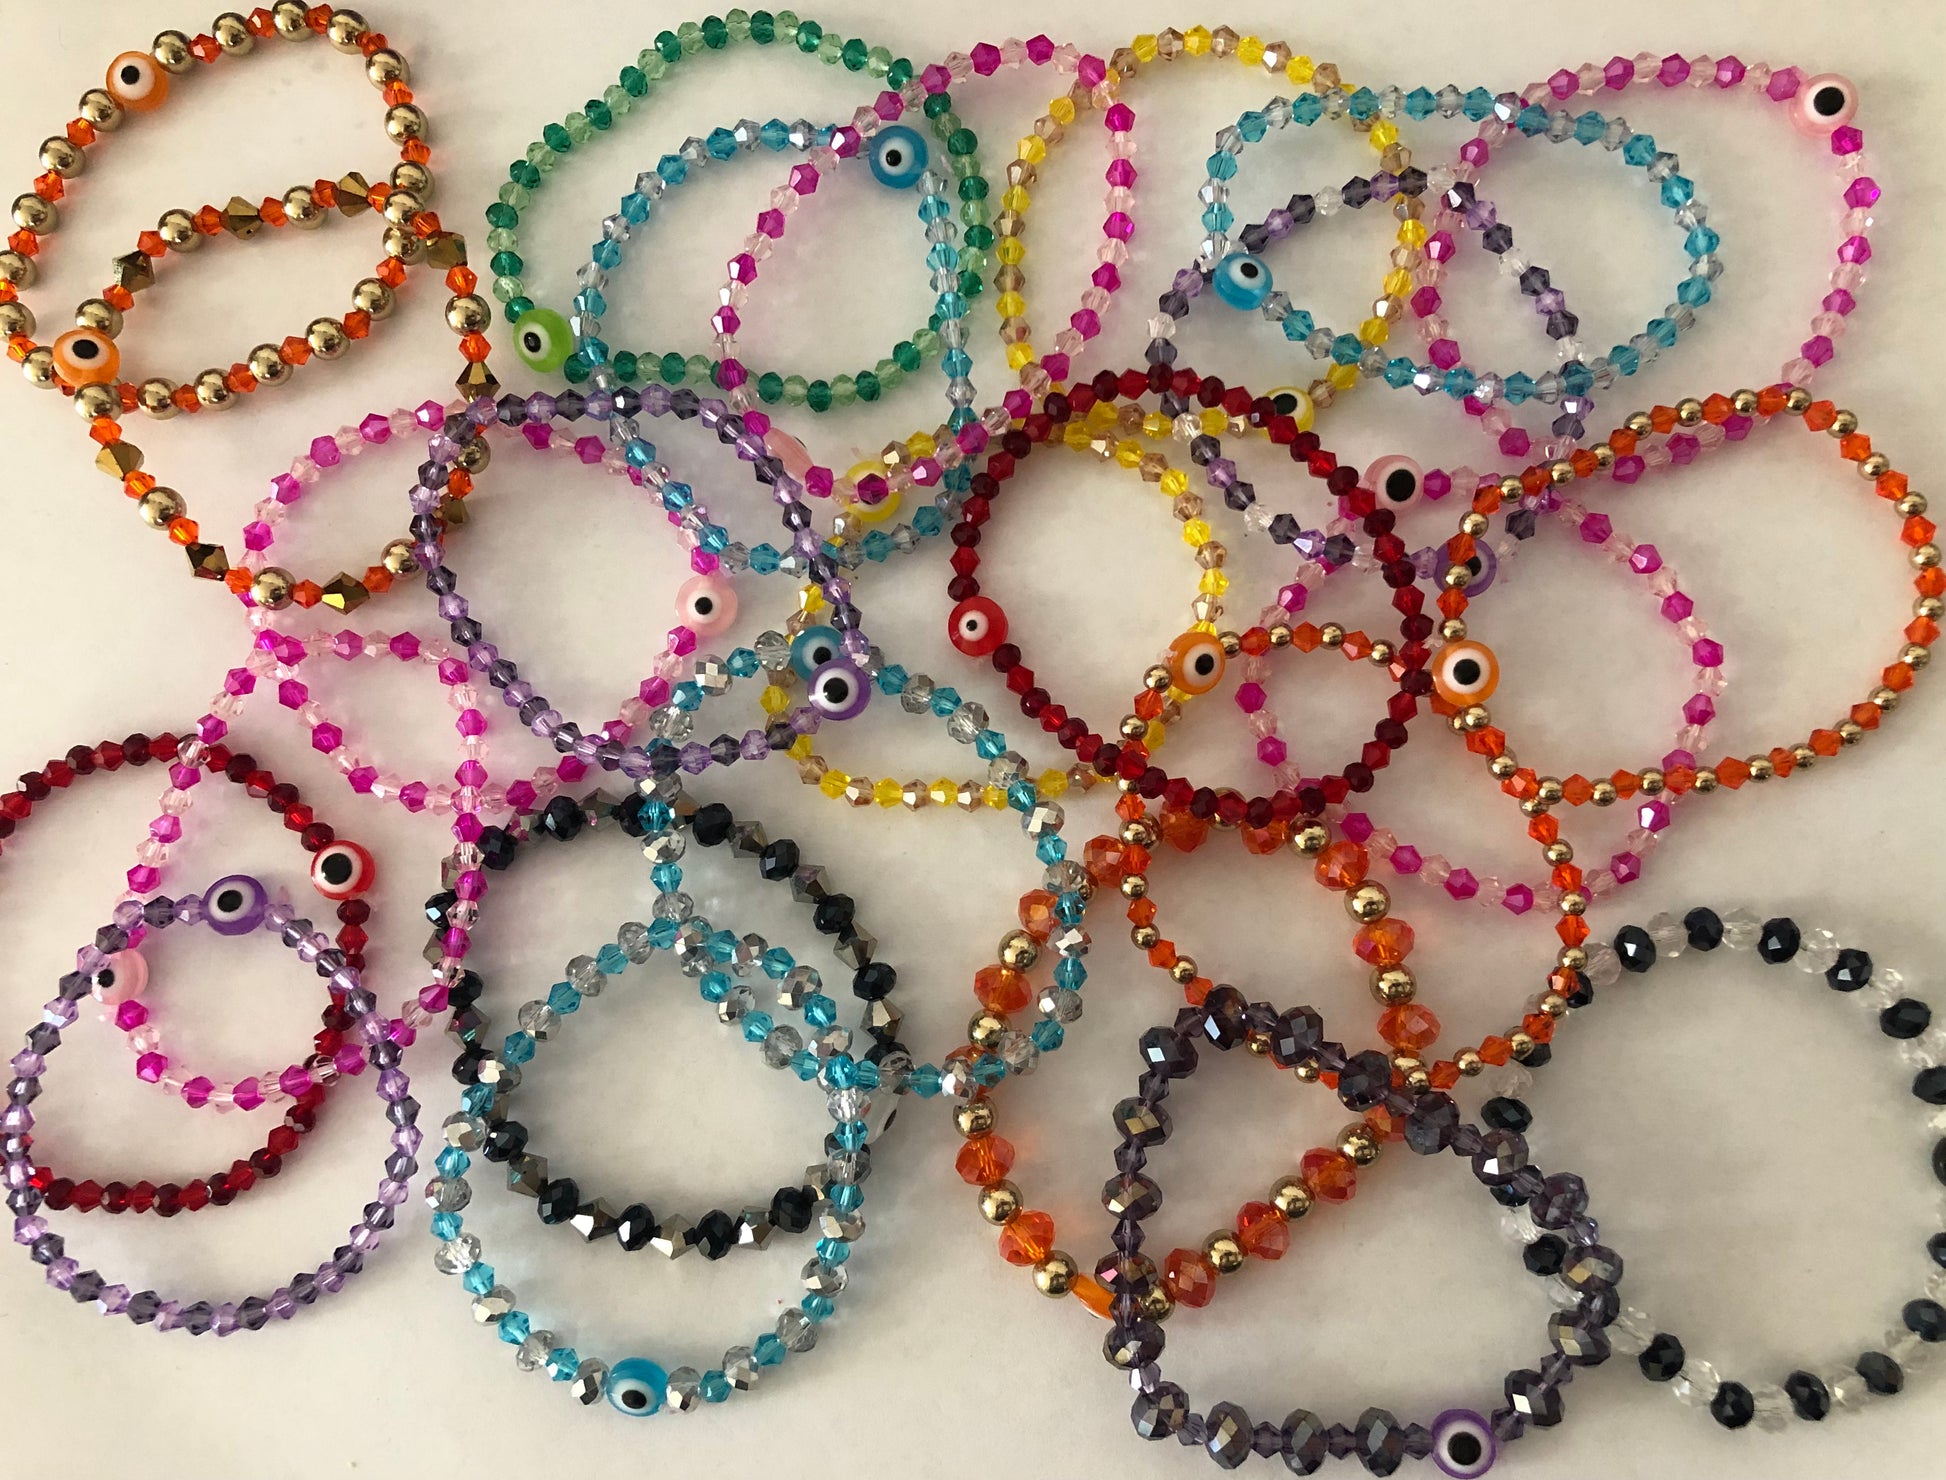 12 Pcs Zodiac Silicone Focal Beads Zodiac Sign Spacer Beads for Pens DIY Jewelry Keychain Bracelet Making